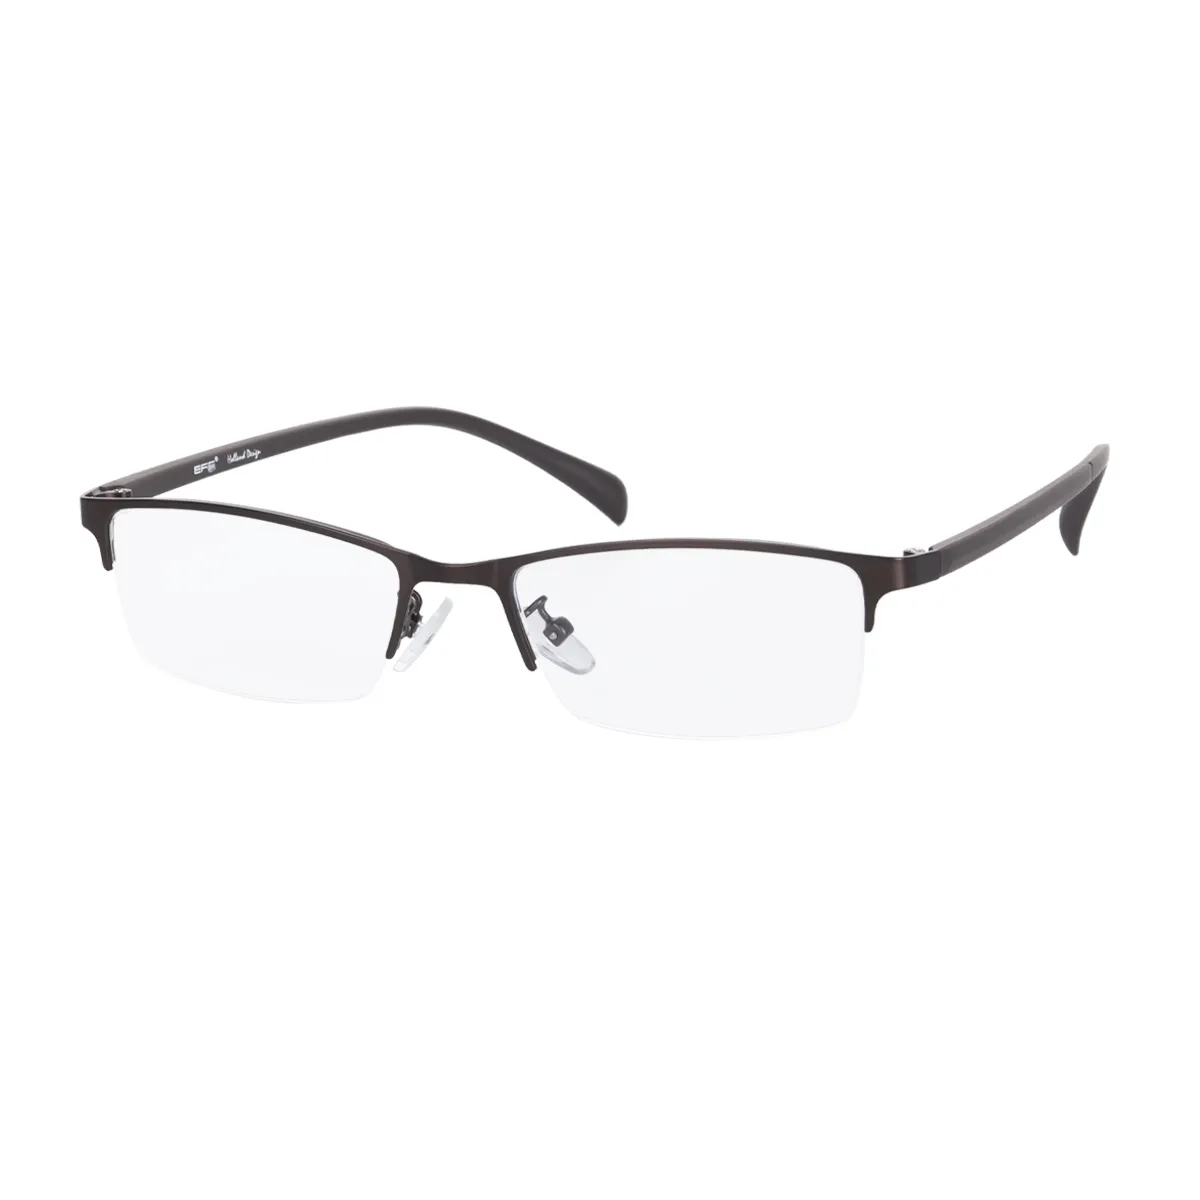 Klain - Half-Rim Brown Glasses for Men - EFE